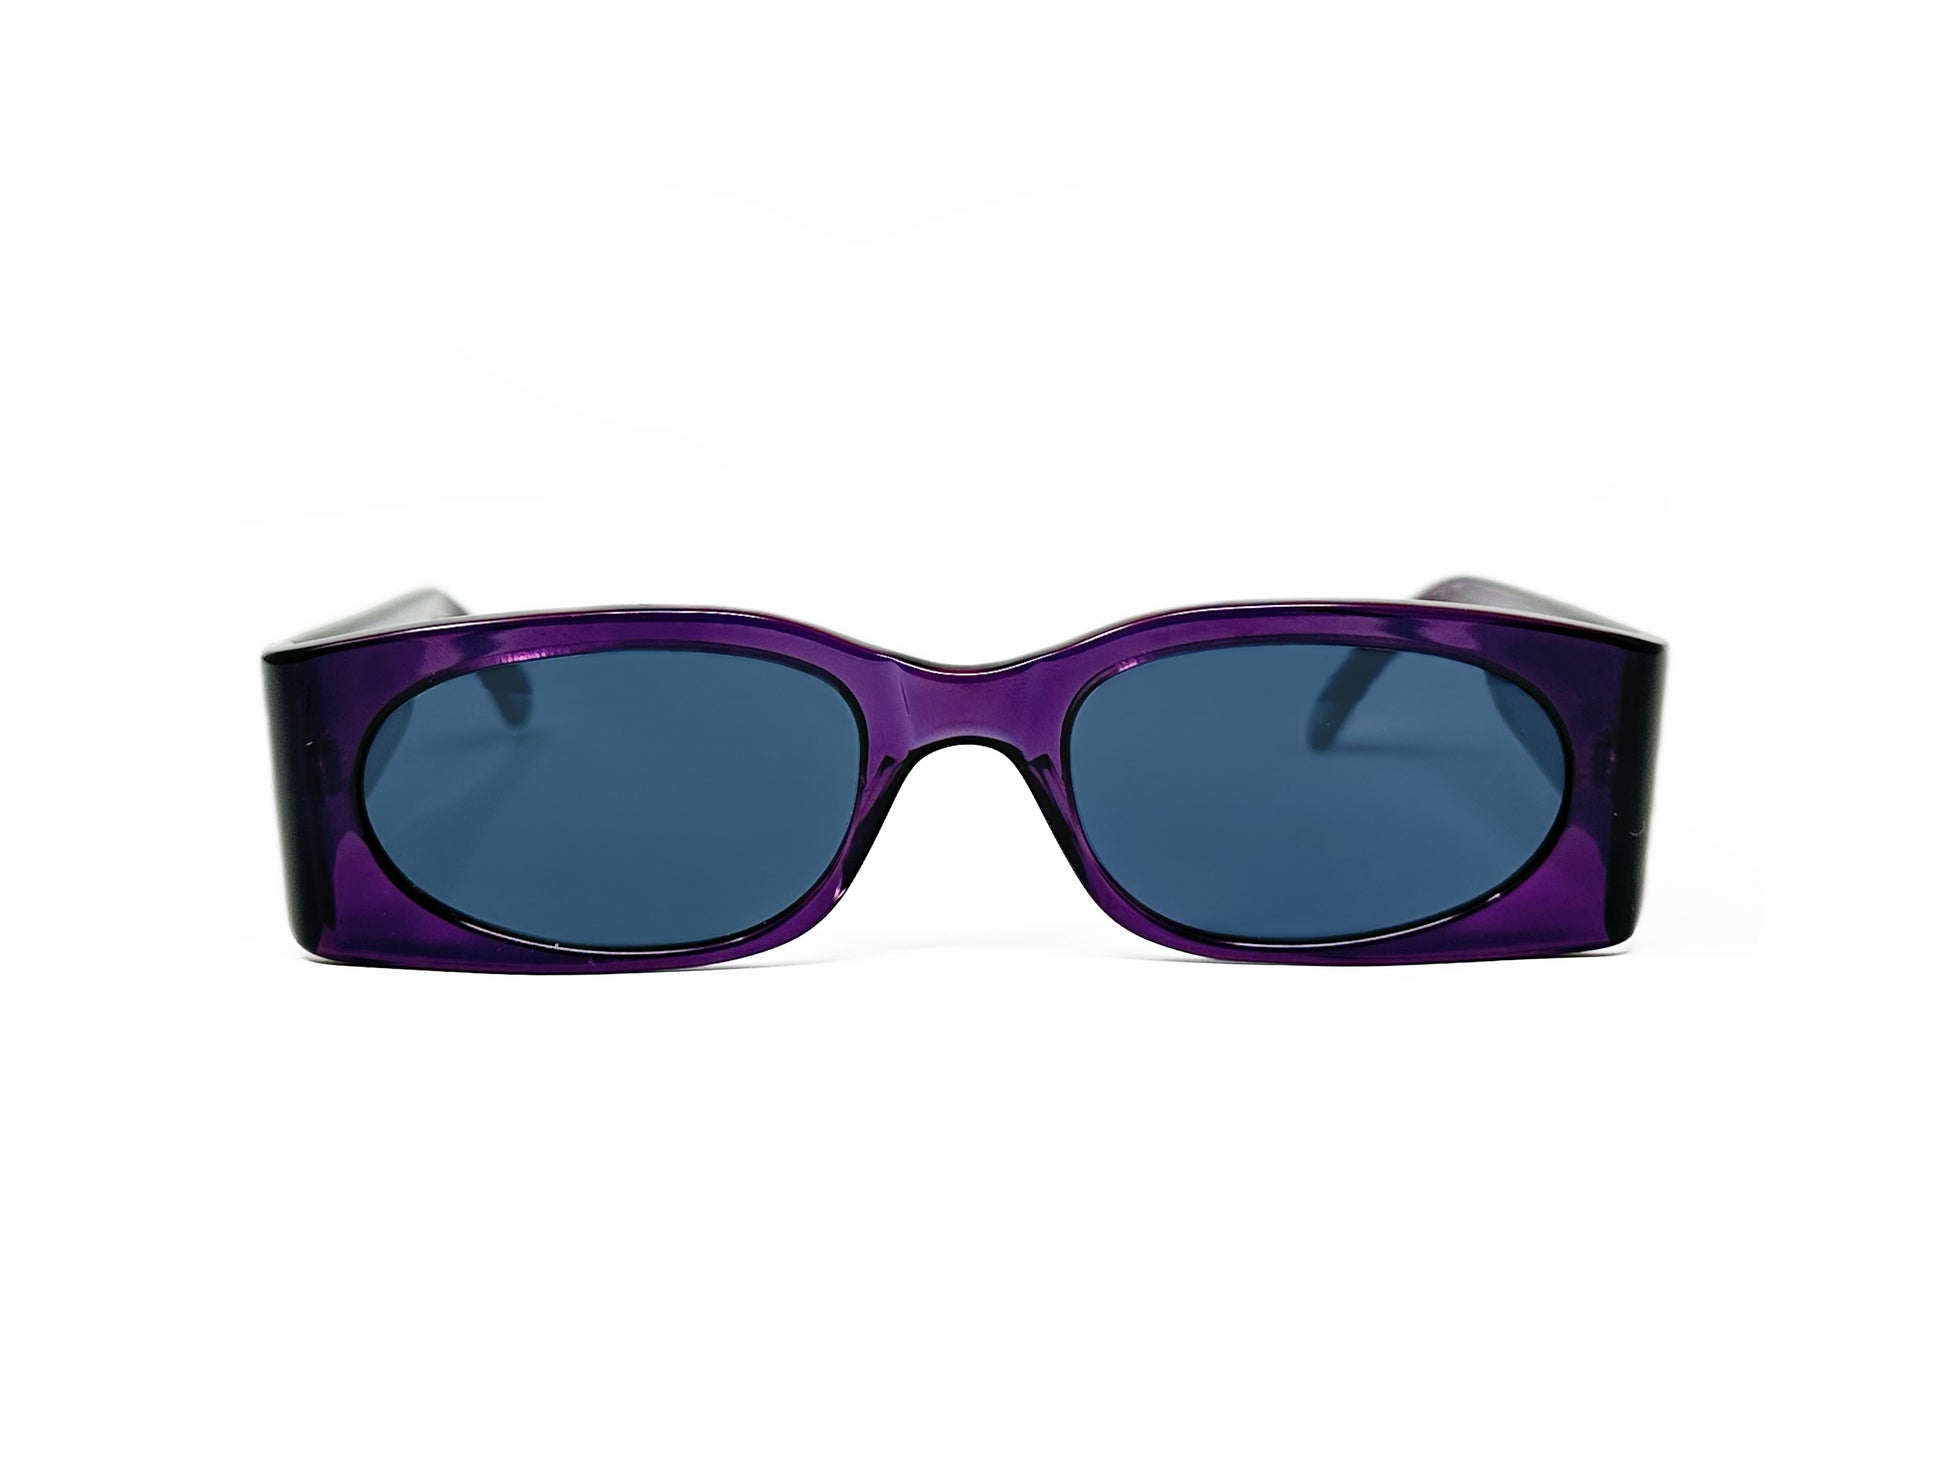 Kador rectangular acetate sunglasses with oval lenses. Model: DF2012. Color: DBA 1363 - Semi-transparent purple. Front